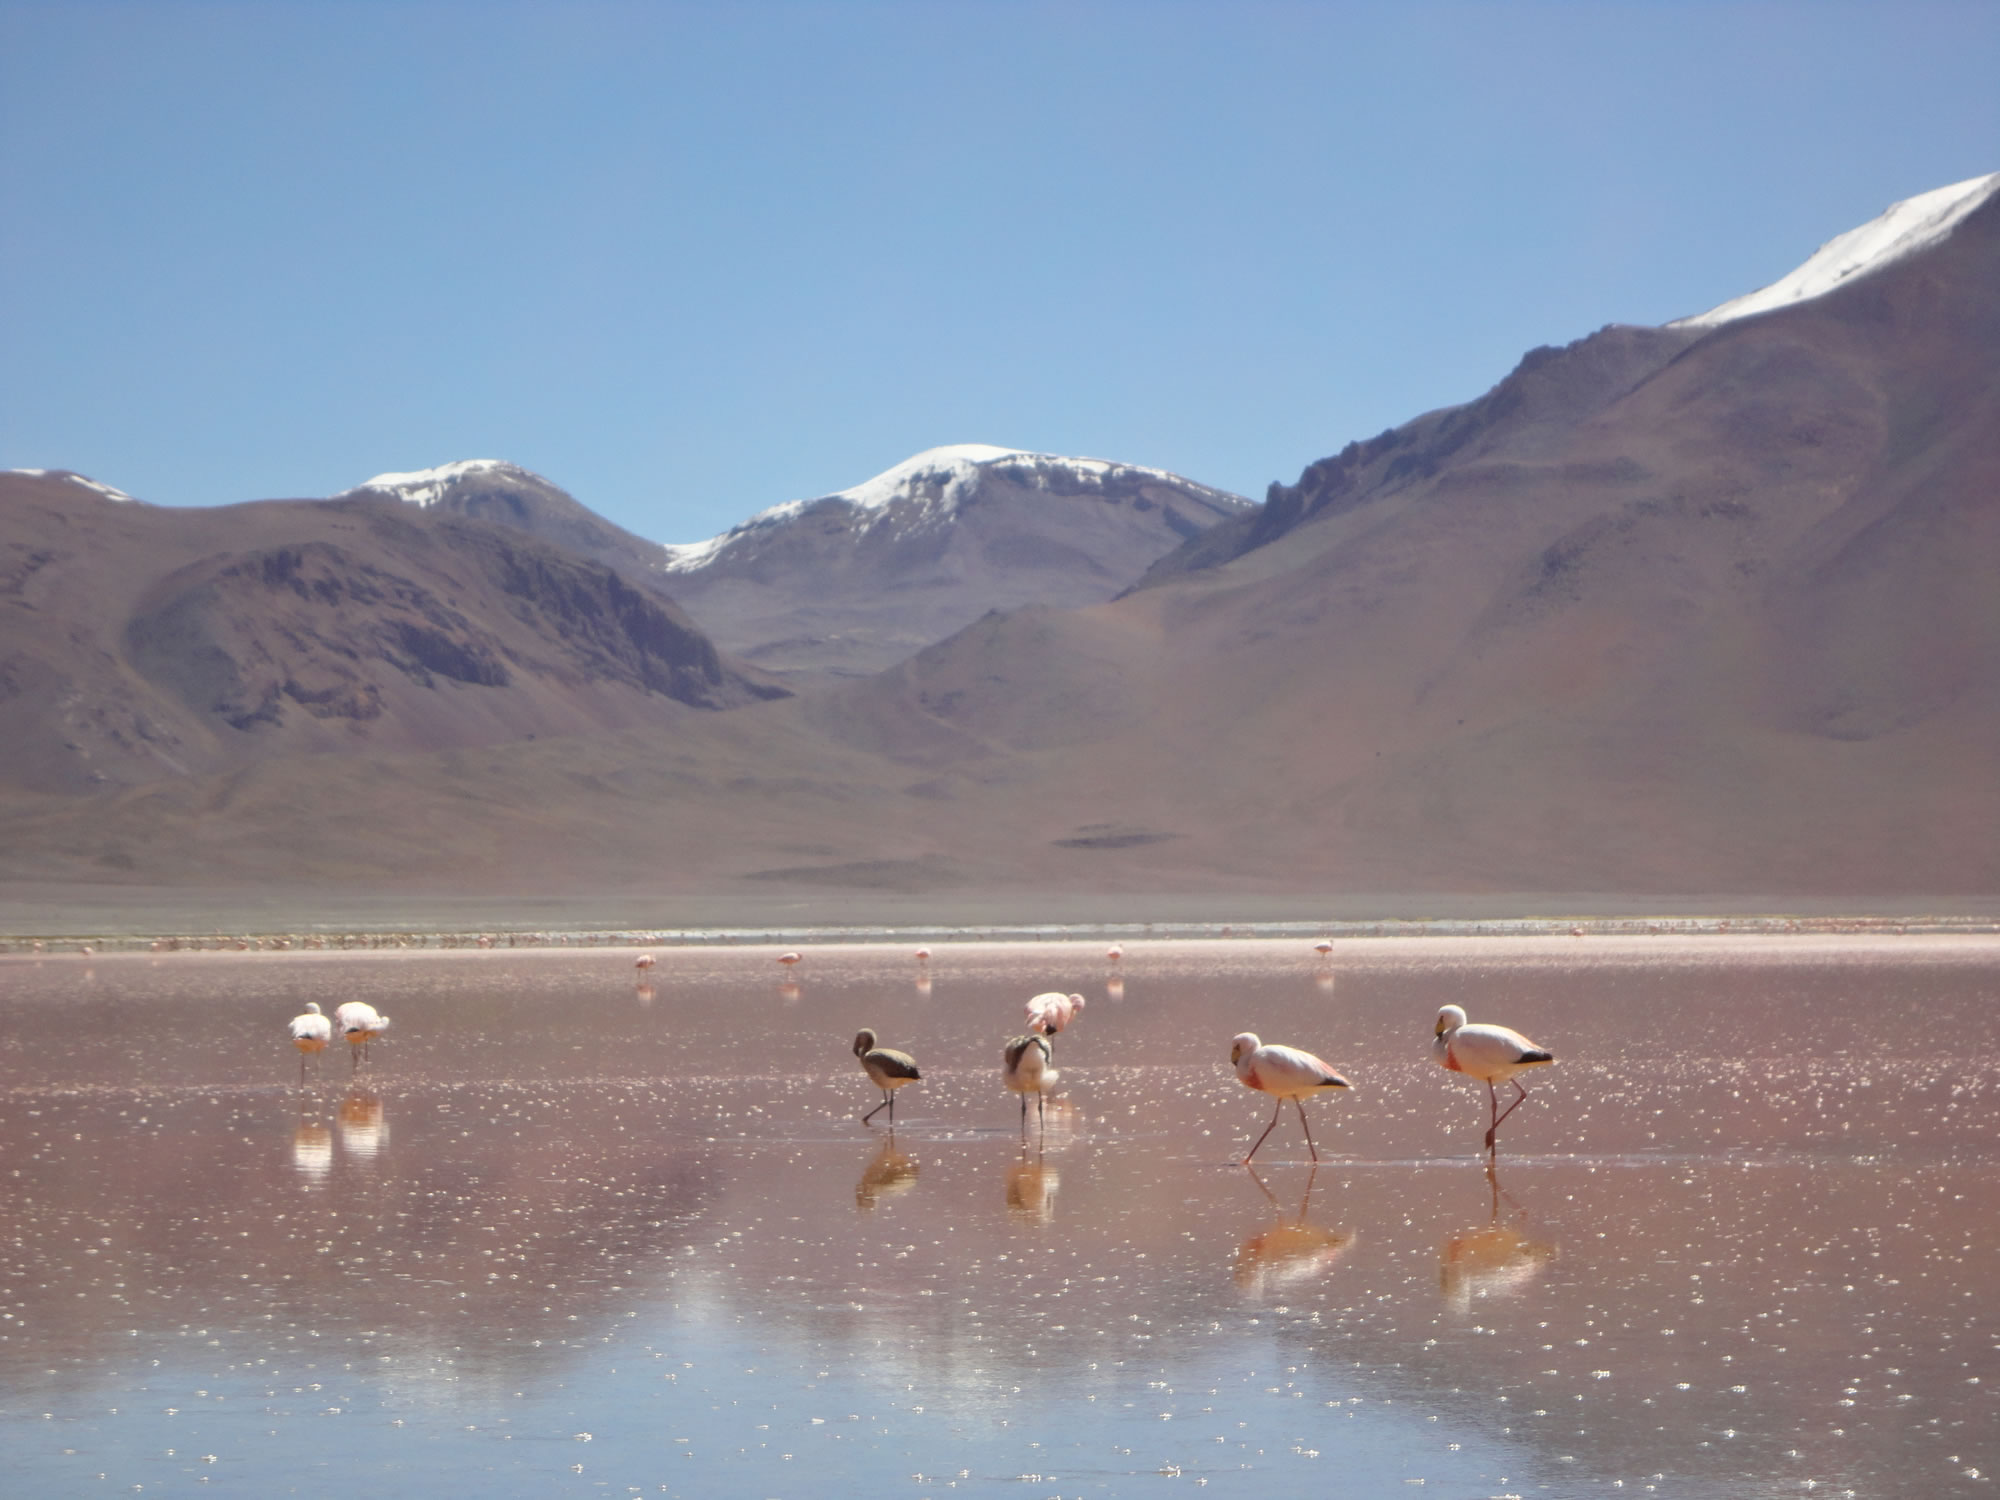 La Paz - Uyuni Salt Flat - La Paz Shared Tour by Plane, Uyuni